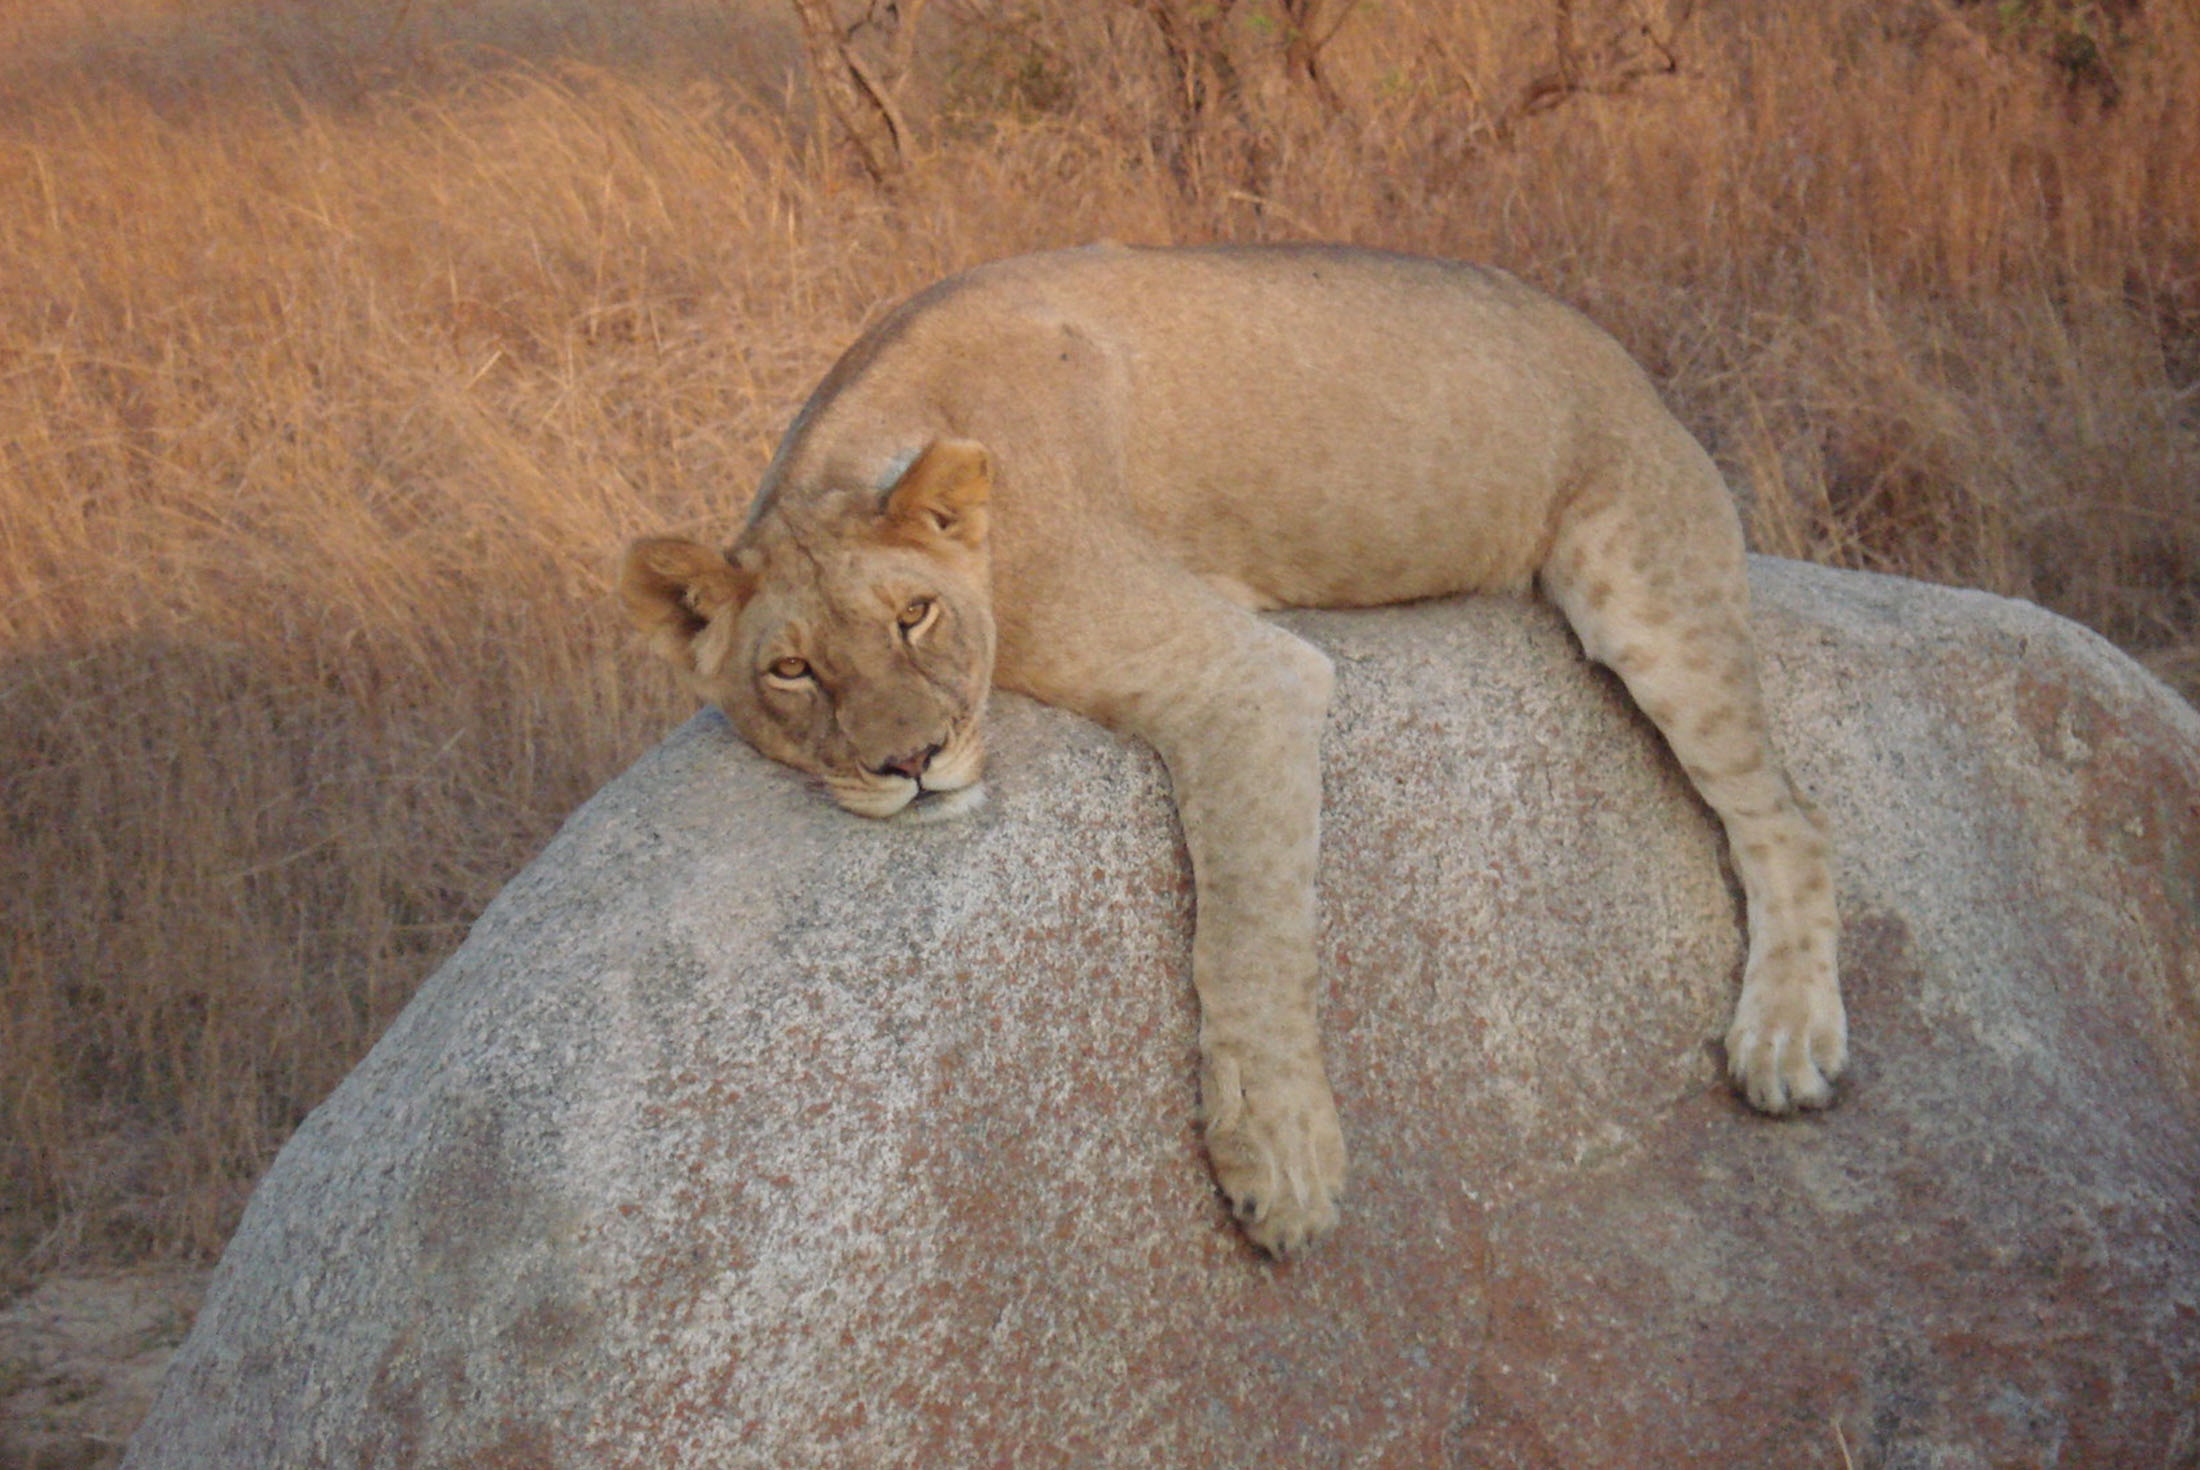 Zimbabwe lioness